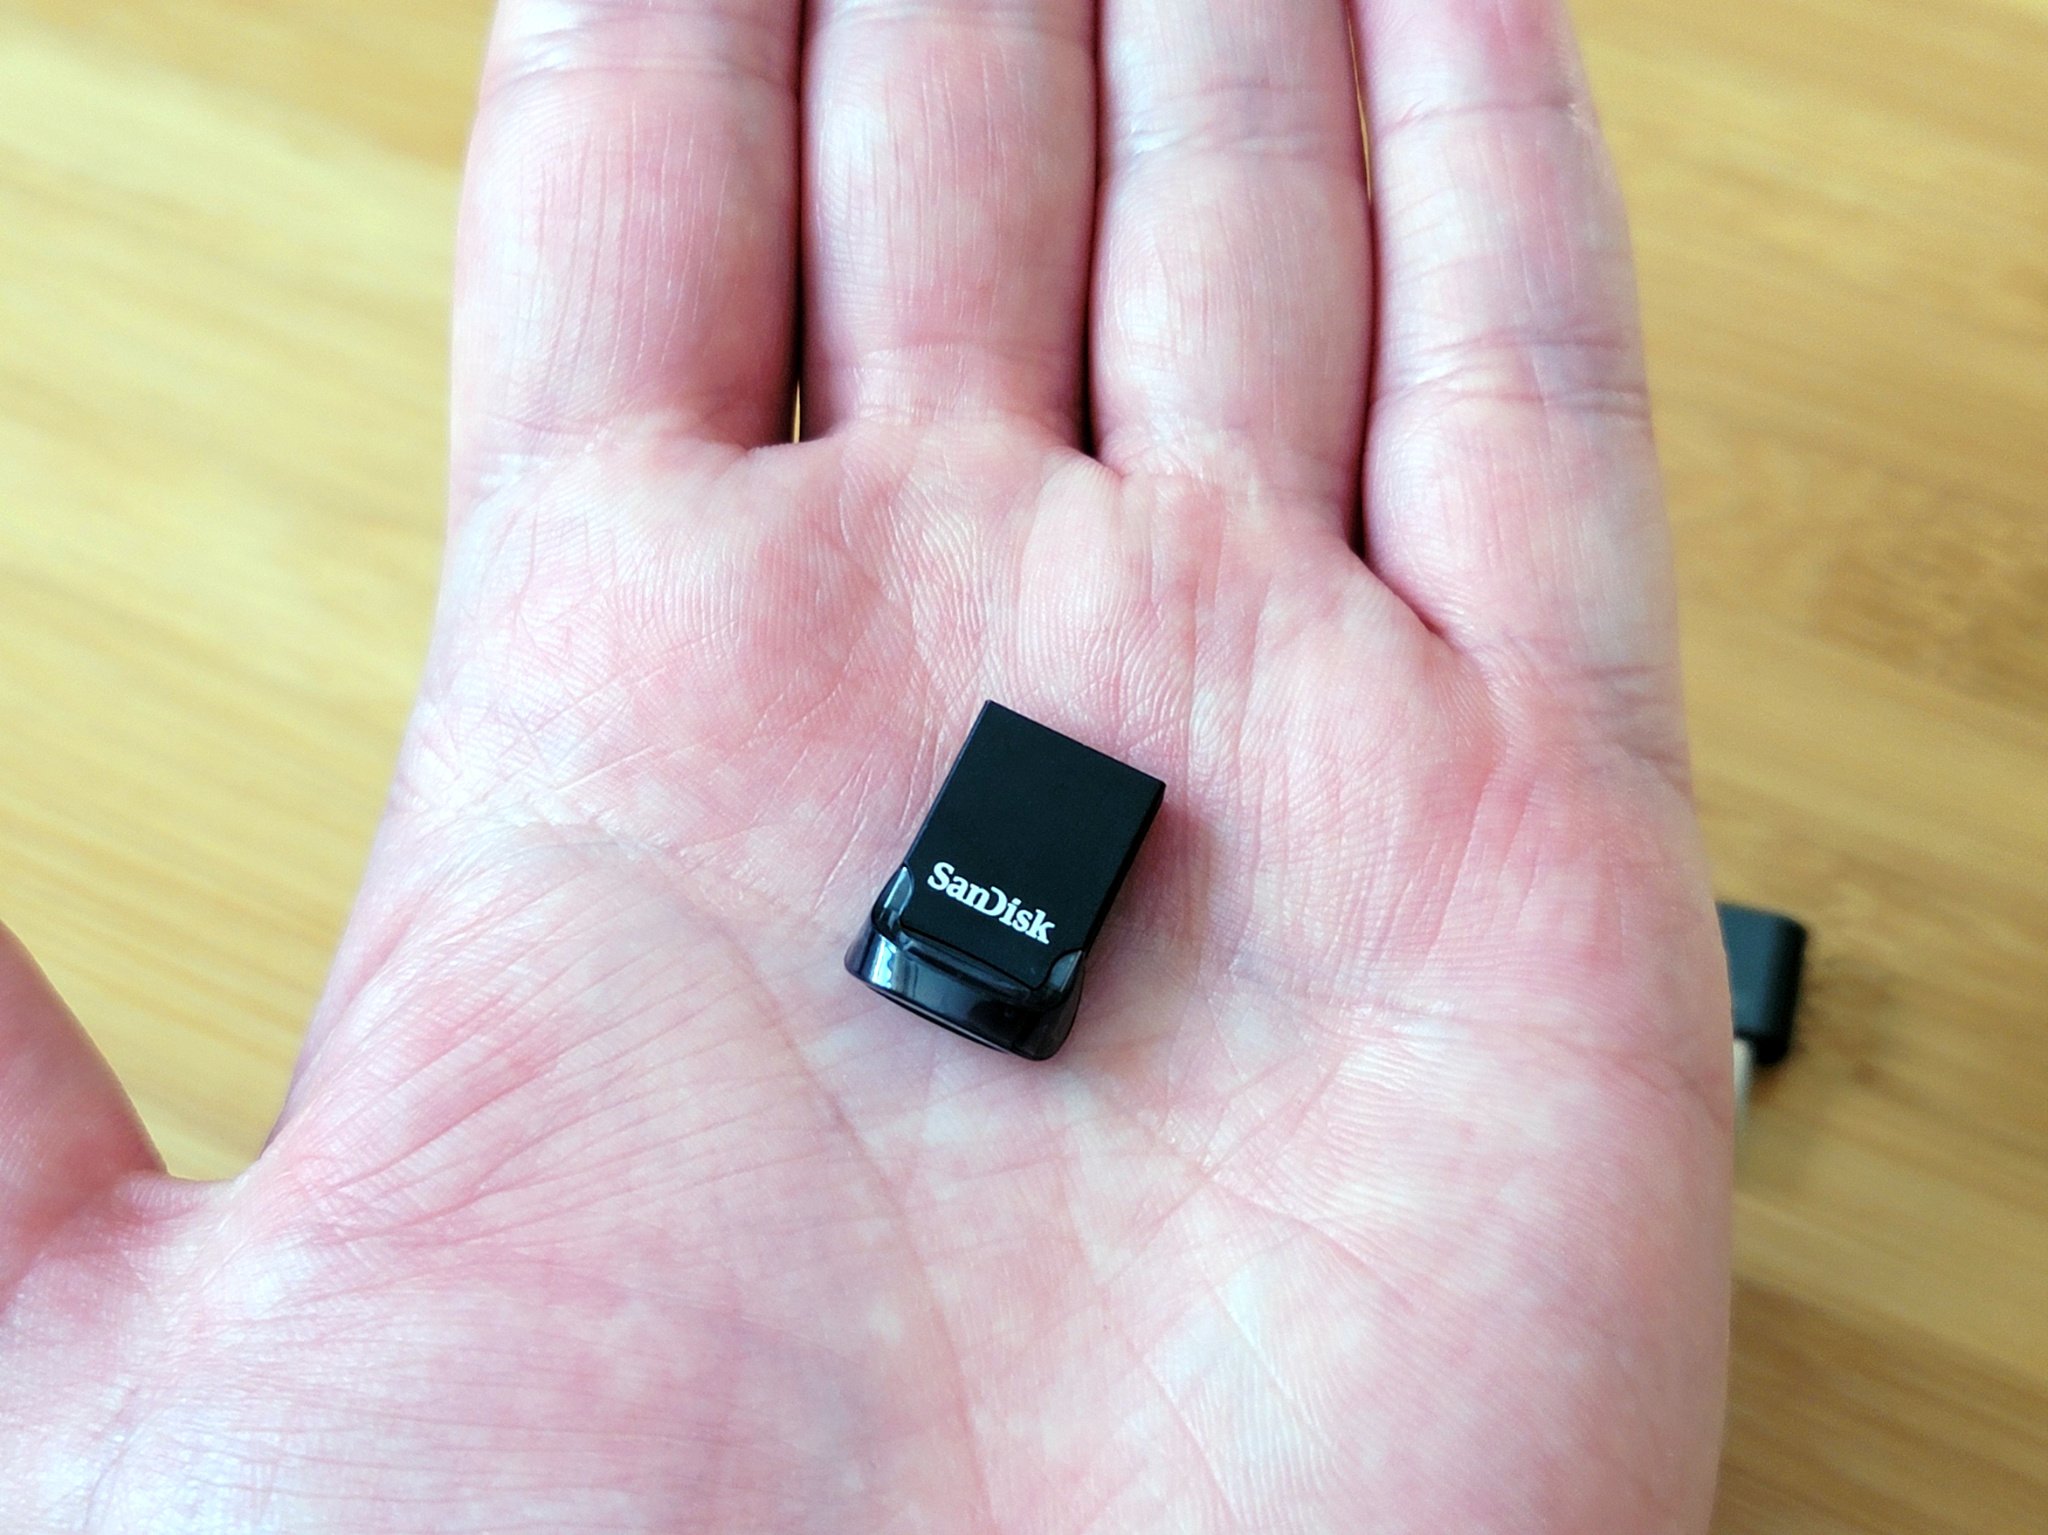 sandisk-ultra-fit-usb-flash-drive-in-hand.jpg